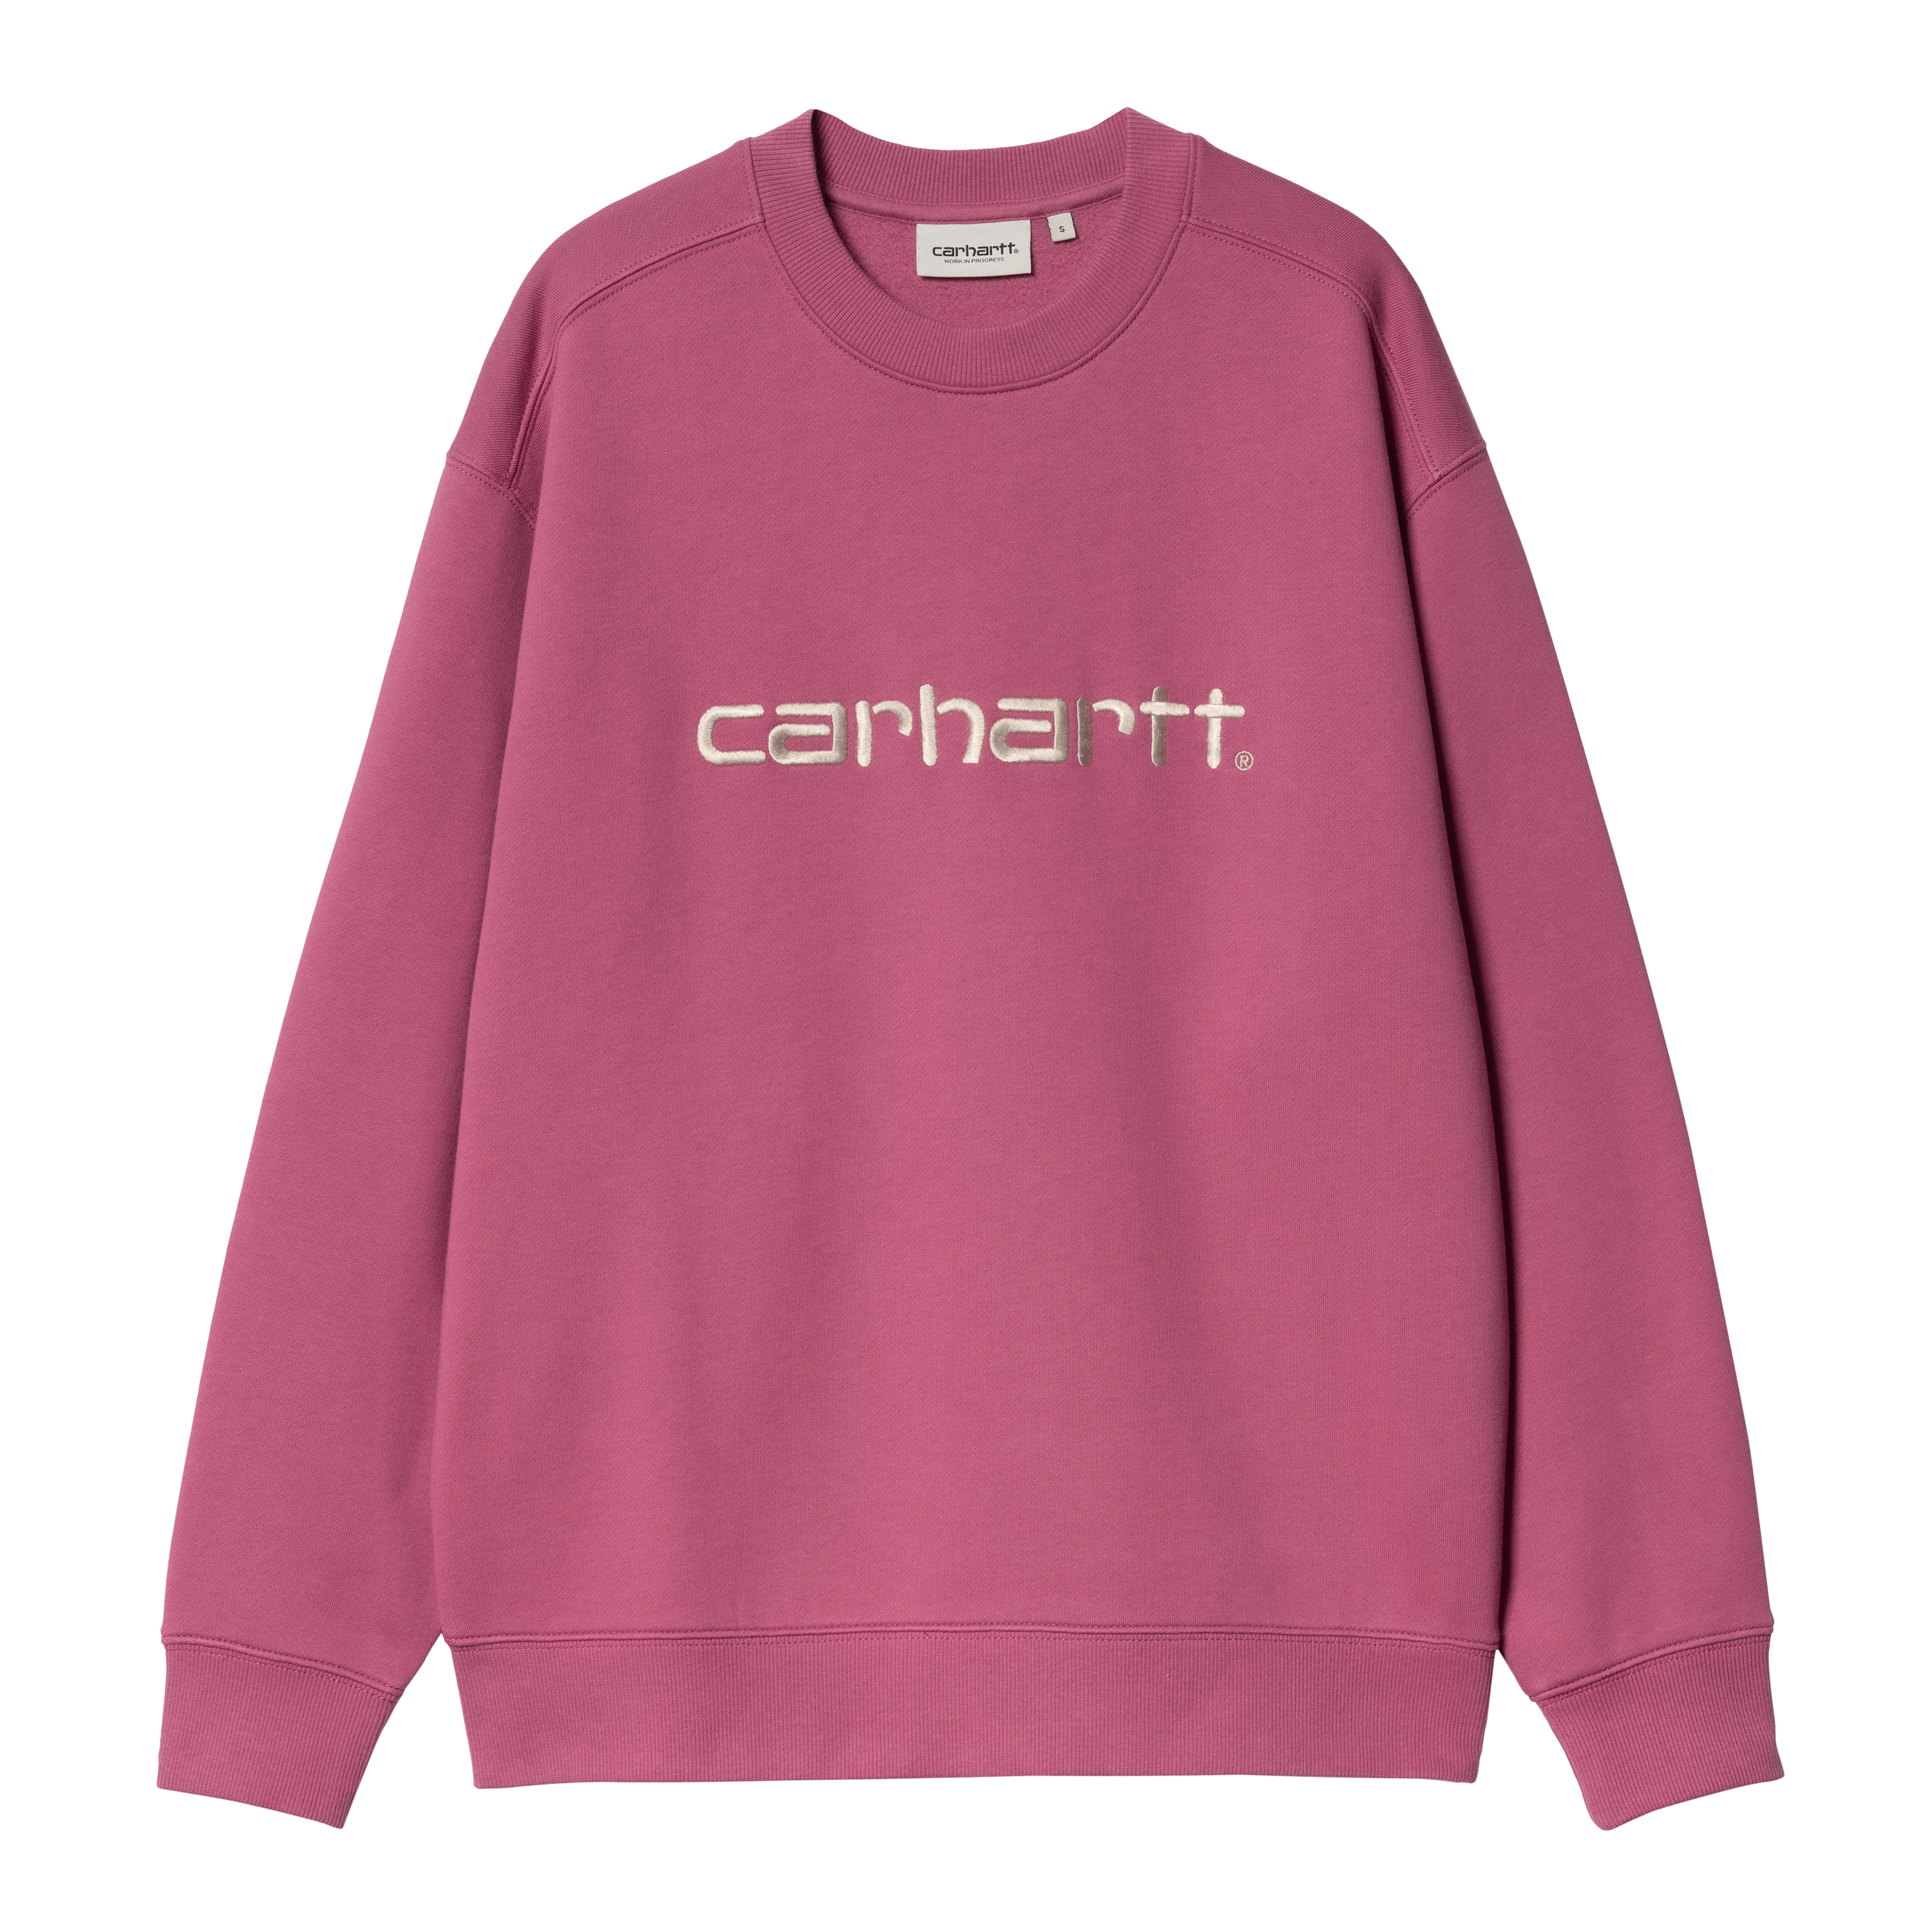 Carhartt WIP Women’s Carhartt Sweat Rose